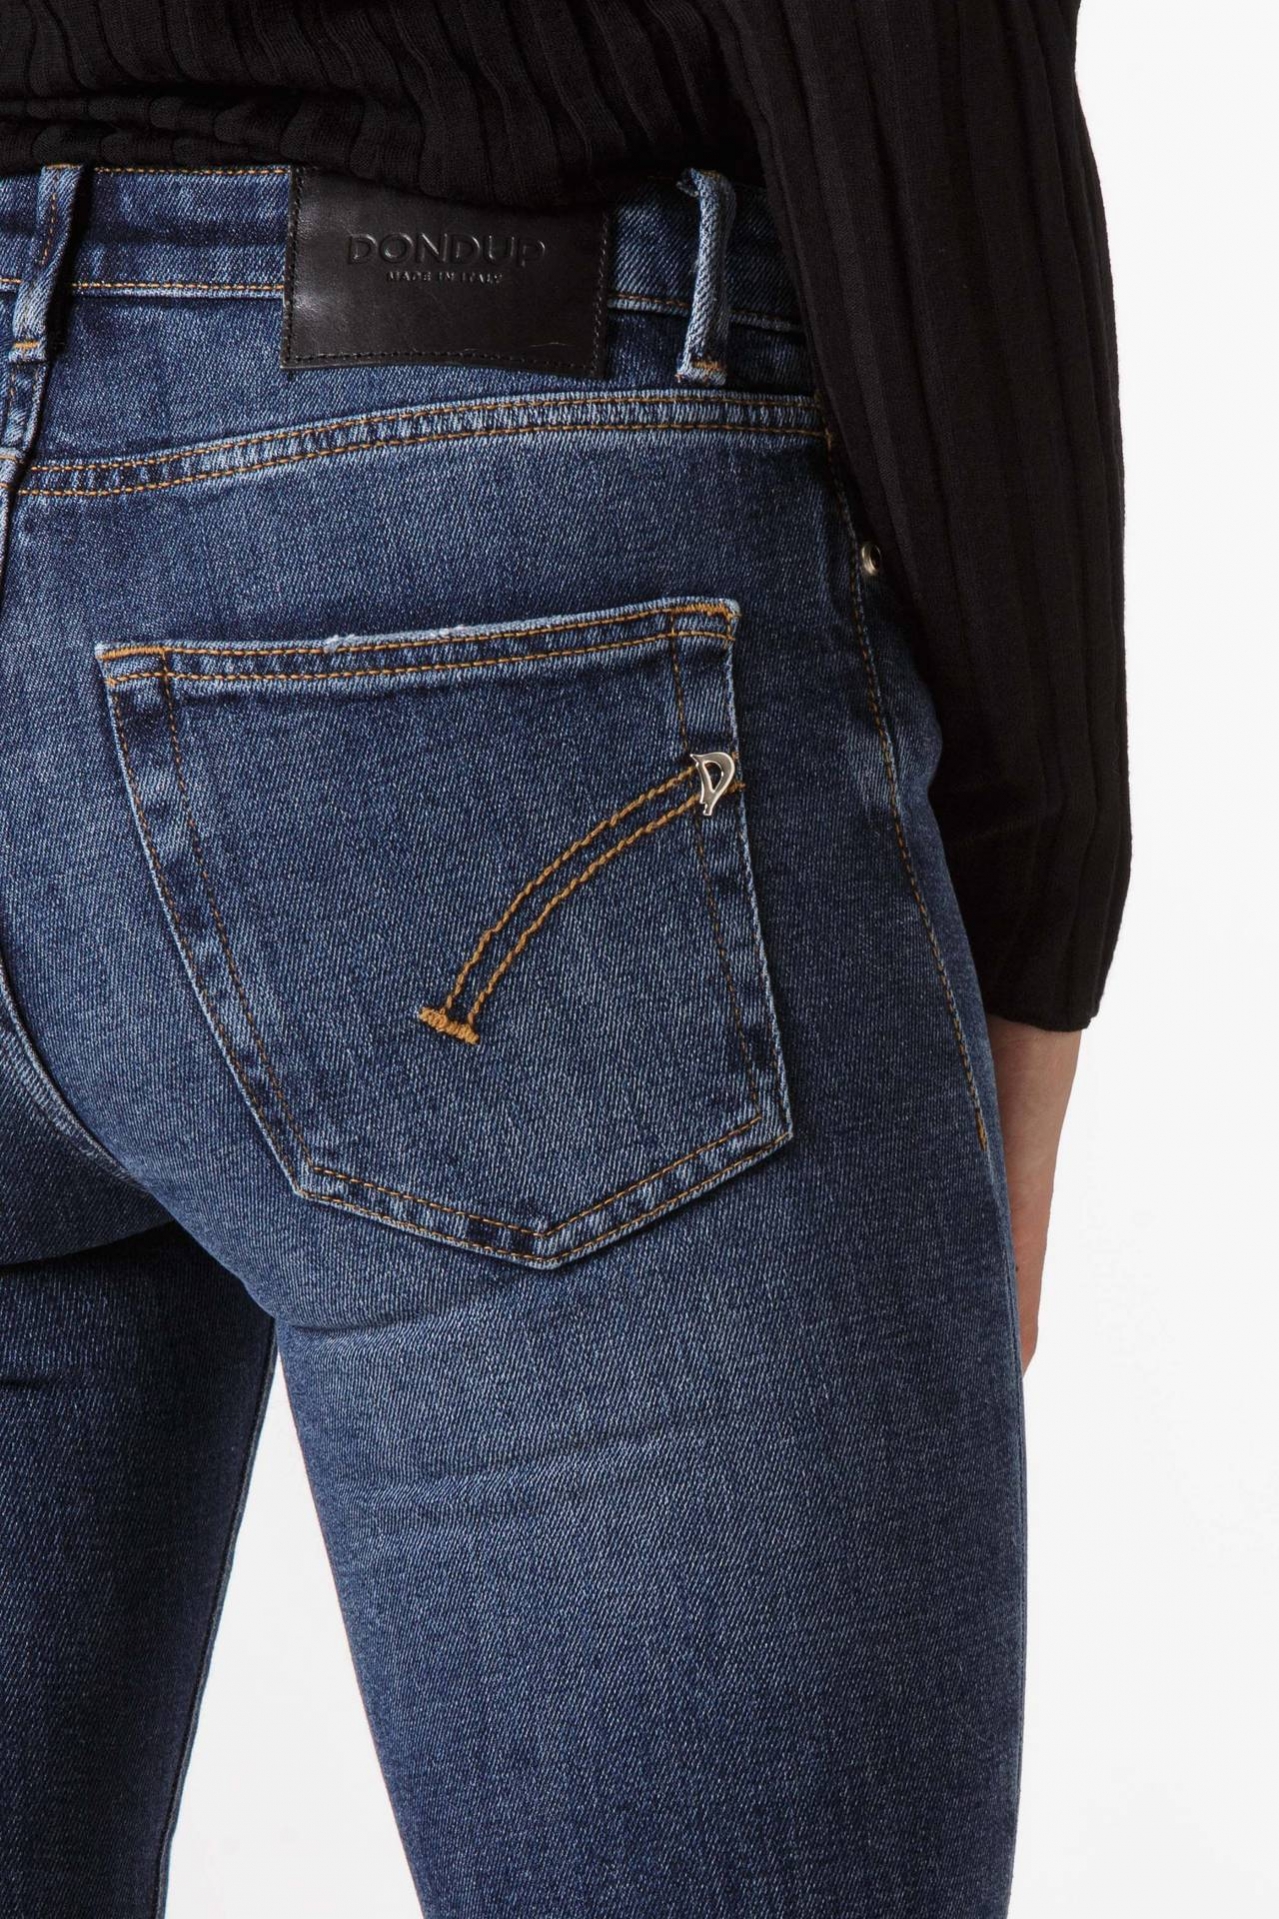 Jeans MANDY crop bootcut